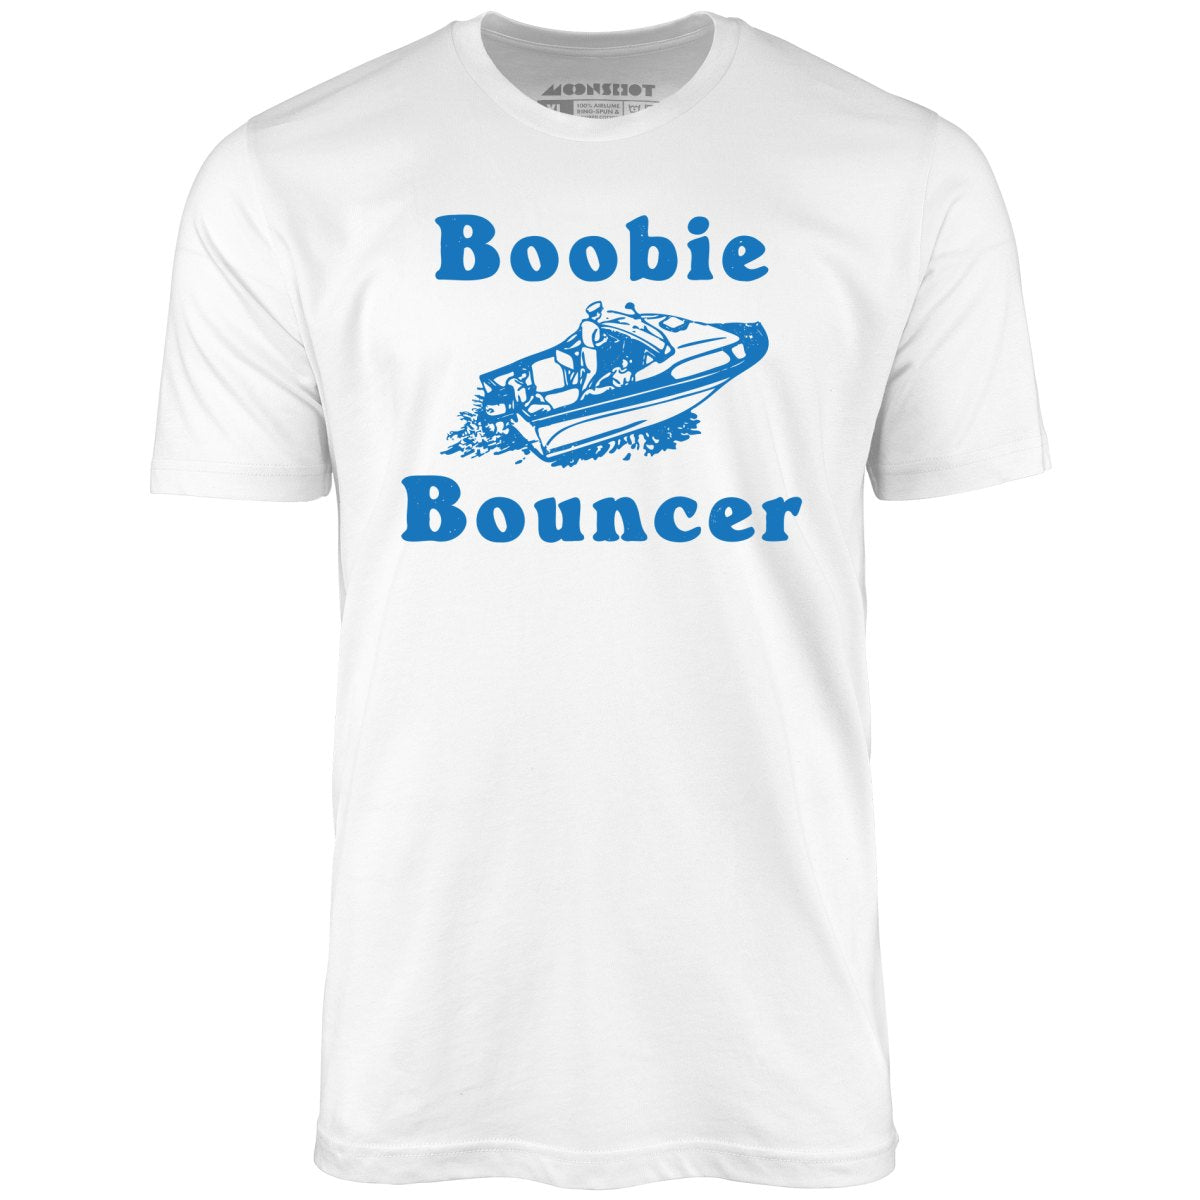 Boobie Bouncer - Unisex T-Shirt